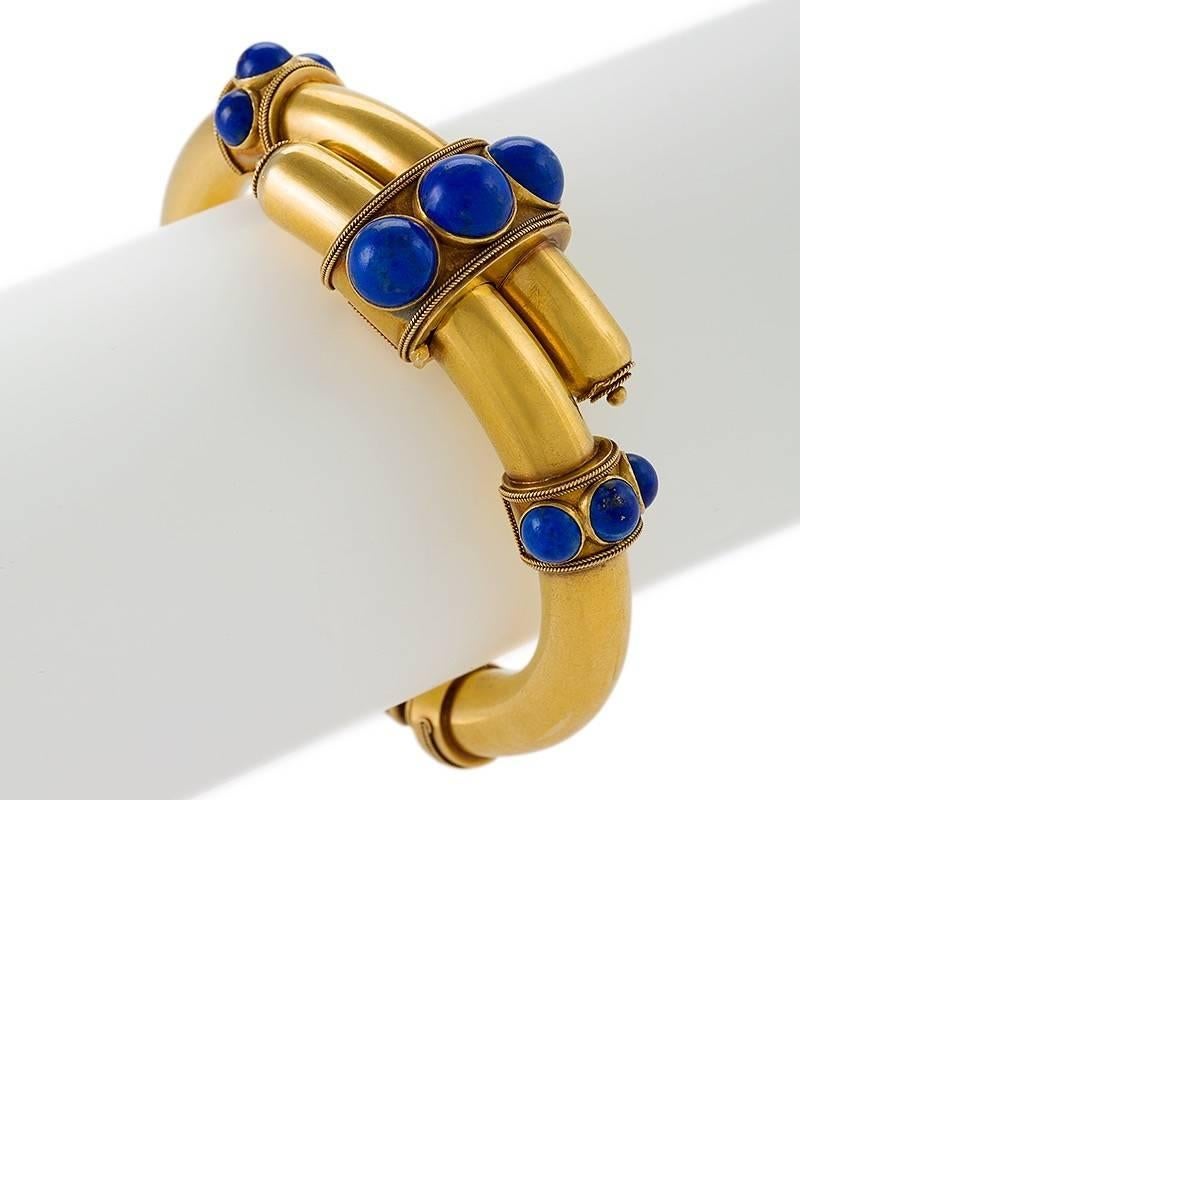 An English Etruscan Revival 18 karat gold and 14 karat gold spring back bracelet with lapis lazuli.  The hinged bracelet is set with 9 cabochon bezel set lapis lazuli stones.  The bracelet is designed in an Etruscan Revival cross over motif